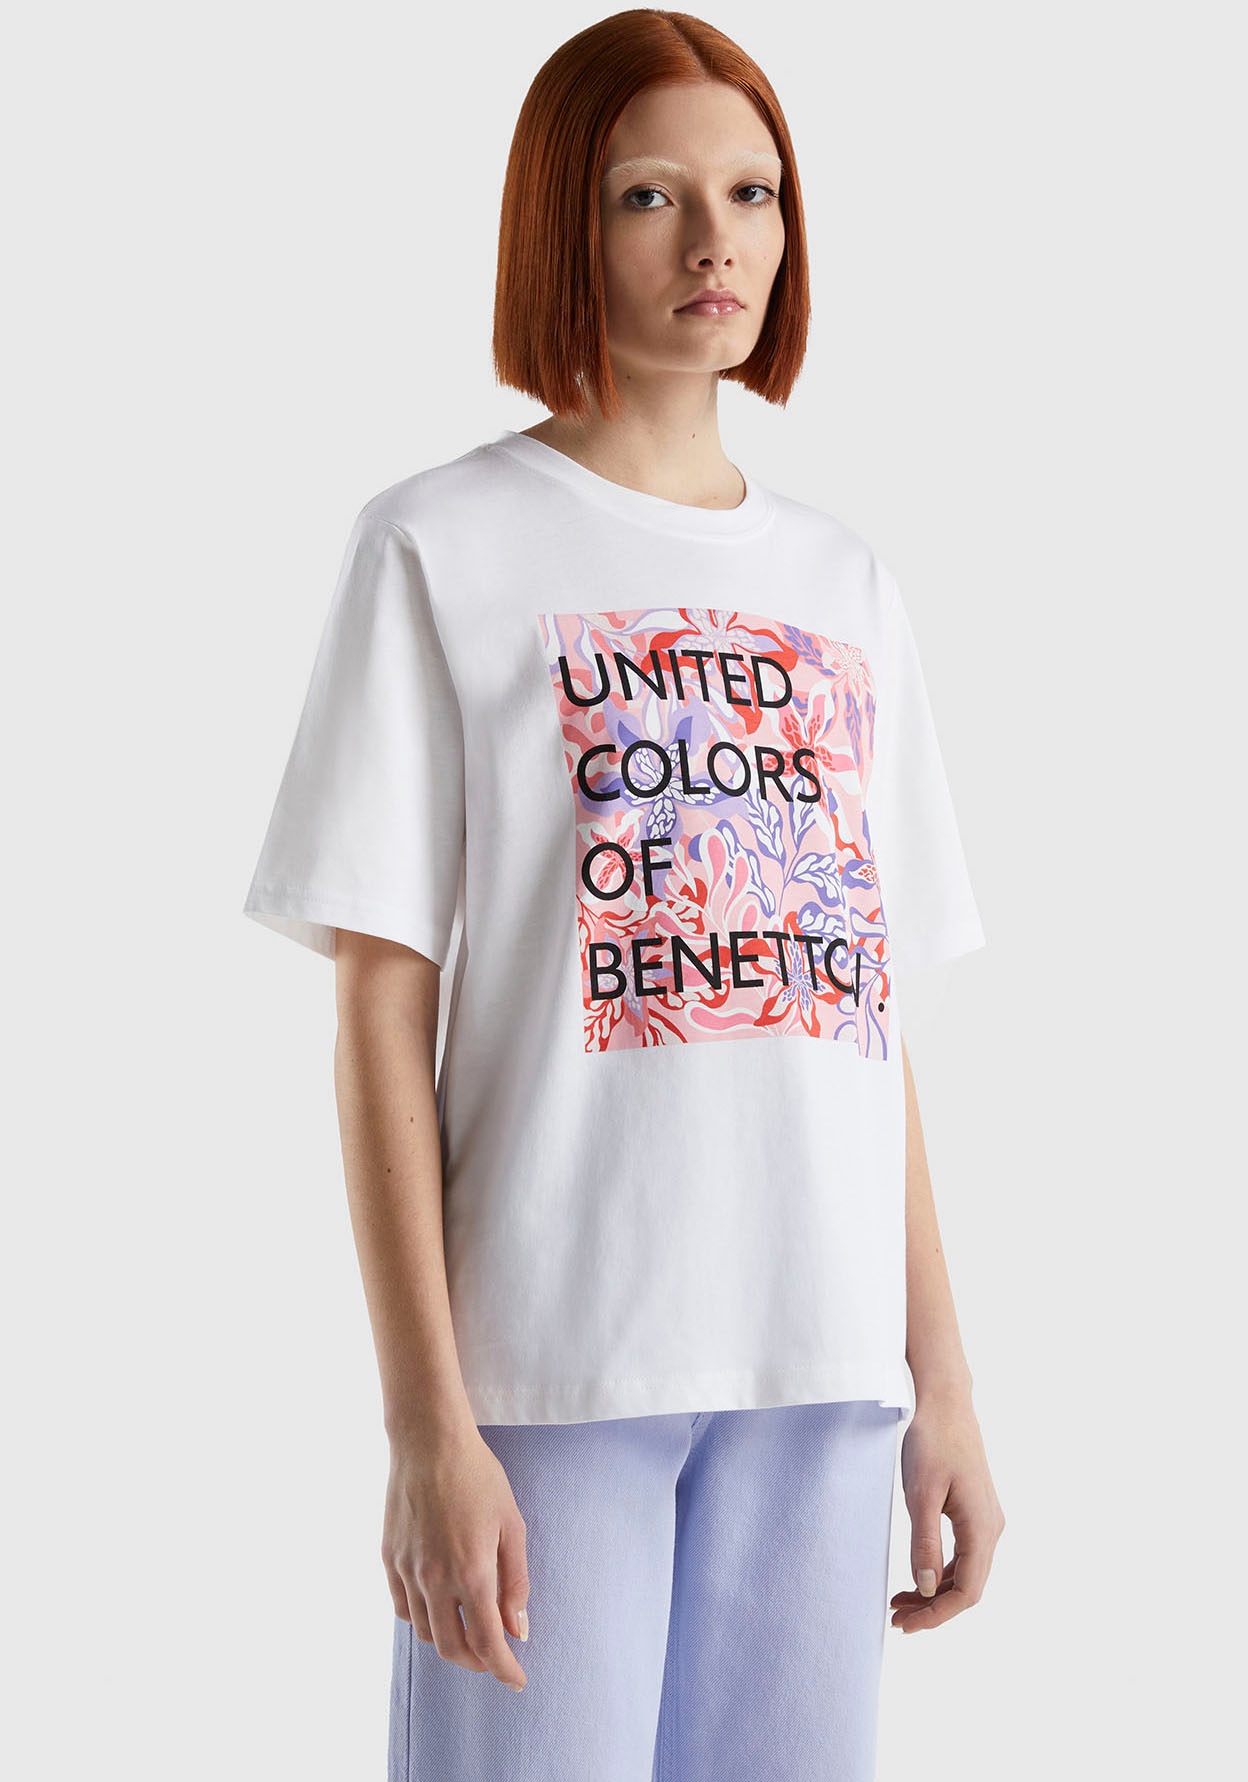 of Colors kaufen ♕ versandkostenfrei United T-Shirt Benetton